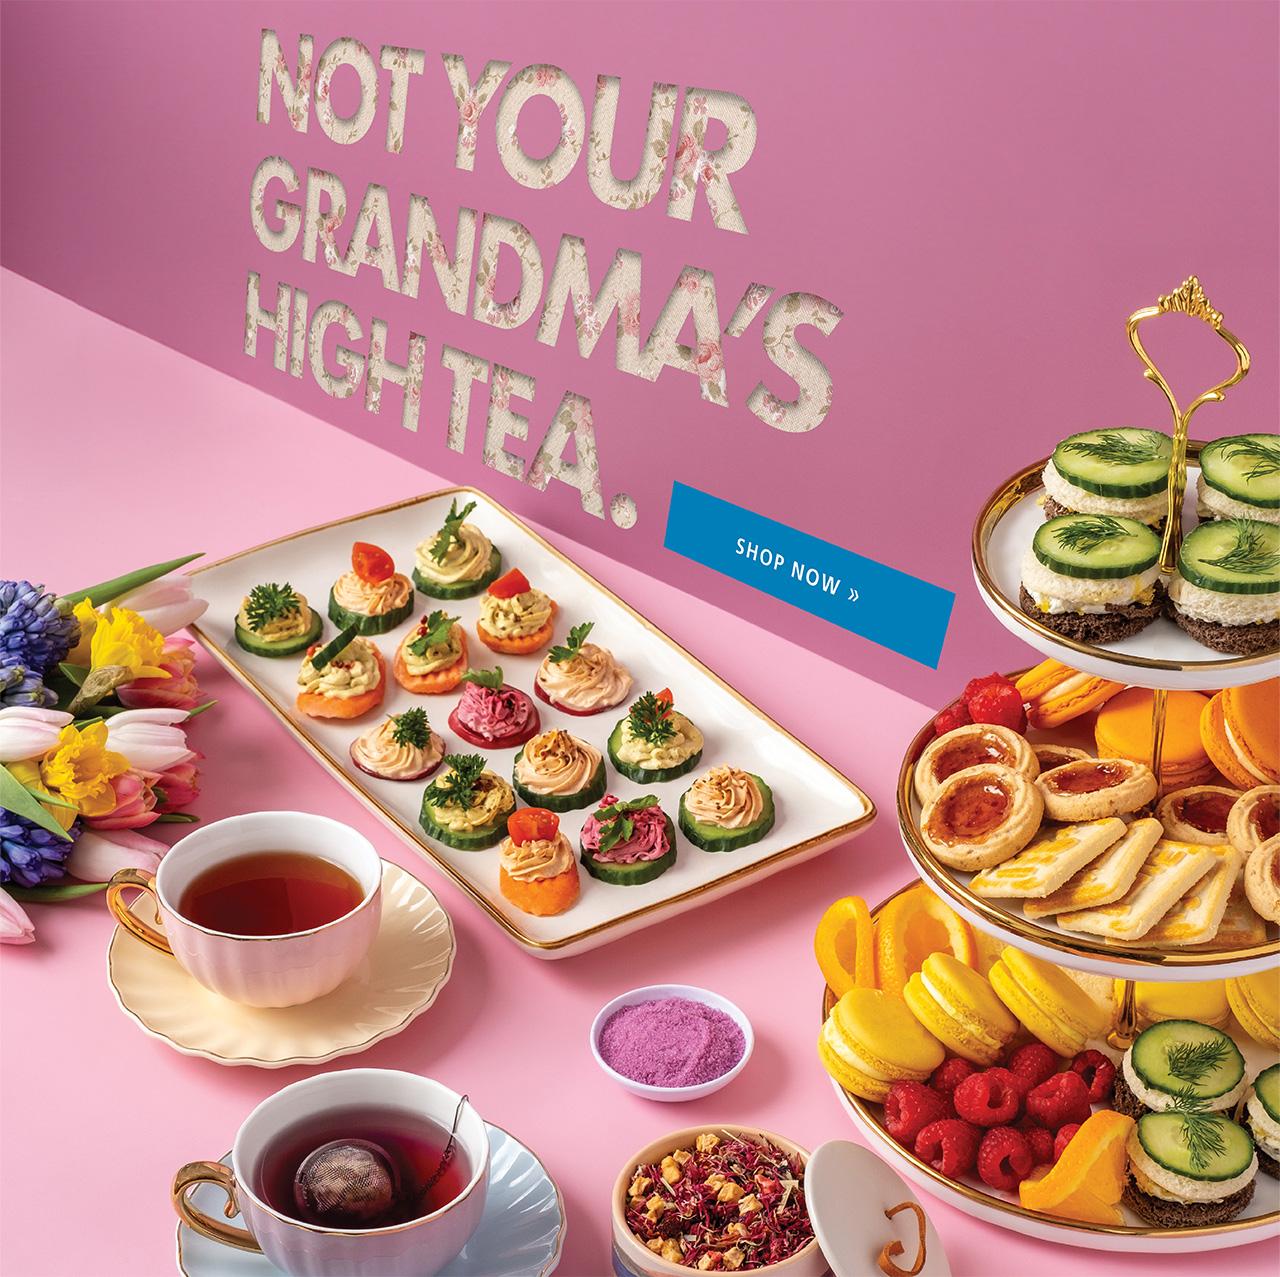 Slide 2: not your grandma's high tea - Shop Now